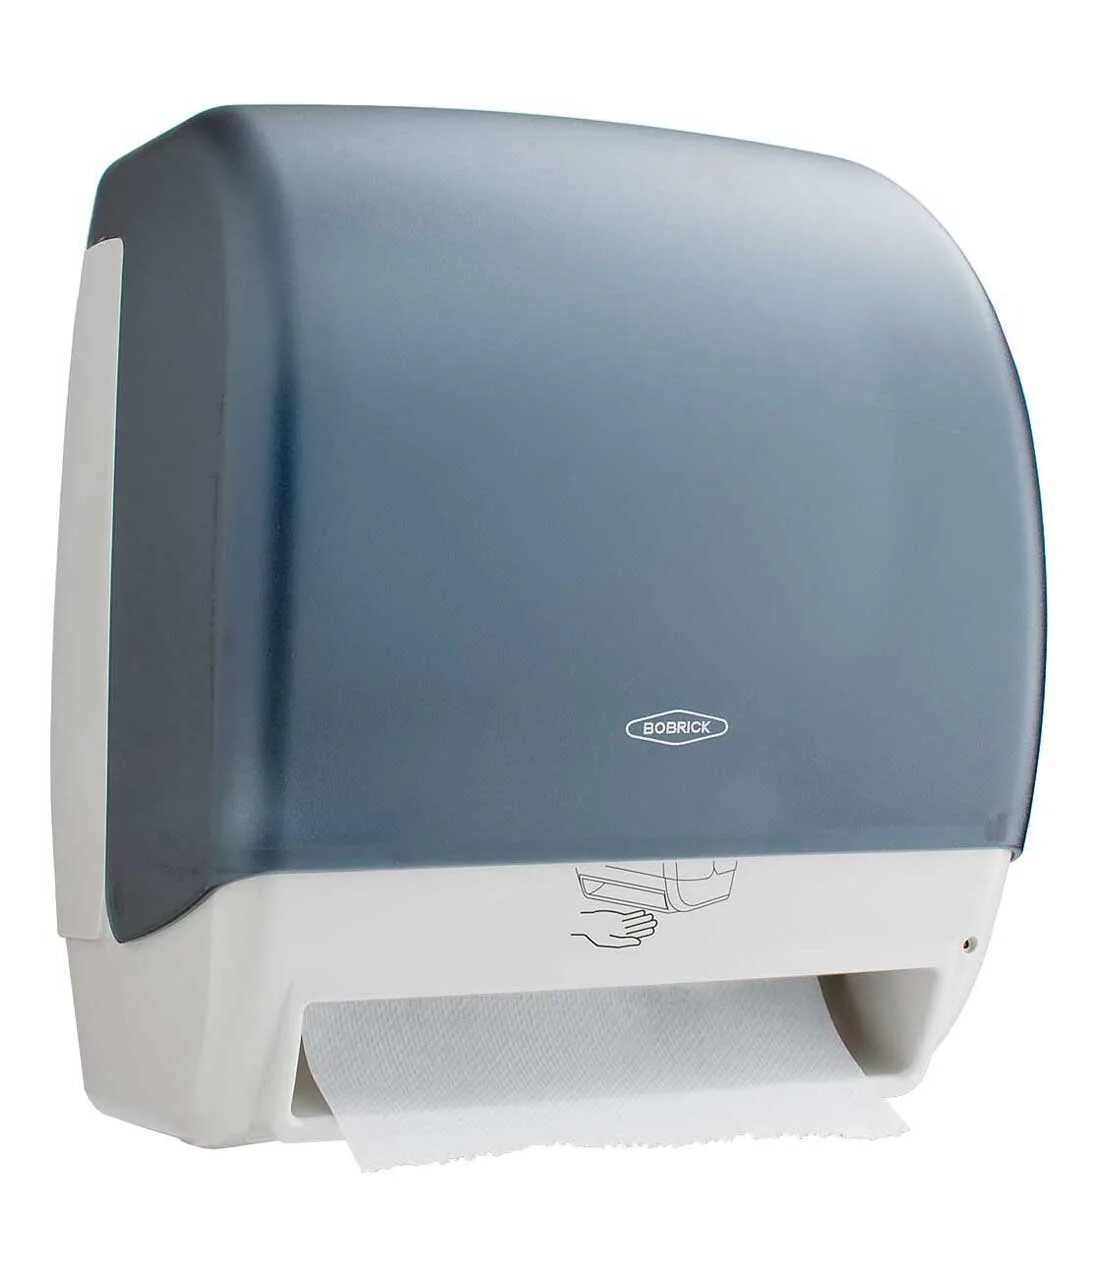 Диспенсер для полотенец mircli ru. Automatic paper Towel Dispenser. Диспенсер для бумажных полотенец настенный. Диспенсер для рулонных бумажных полотенец. Диспансер для полотенец.